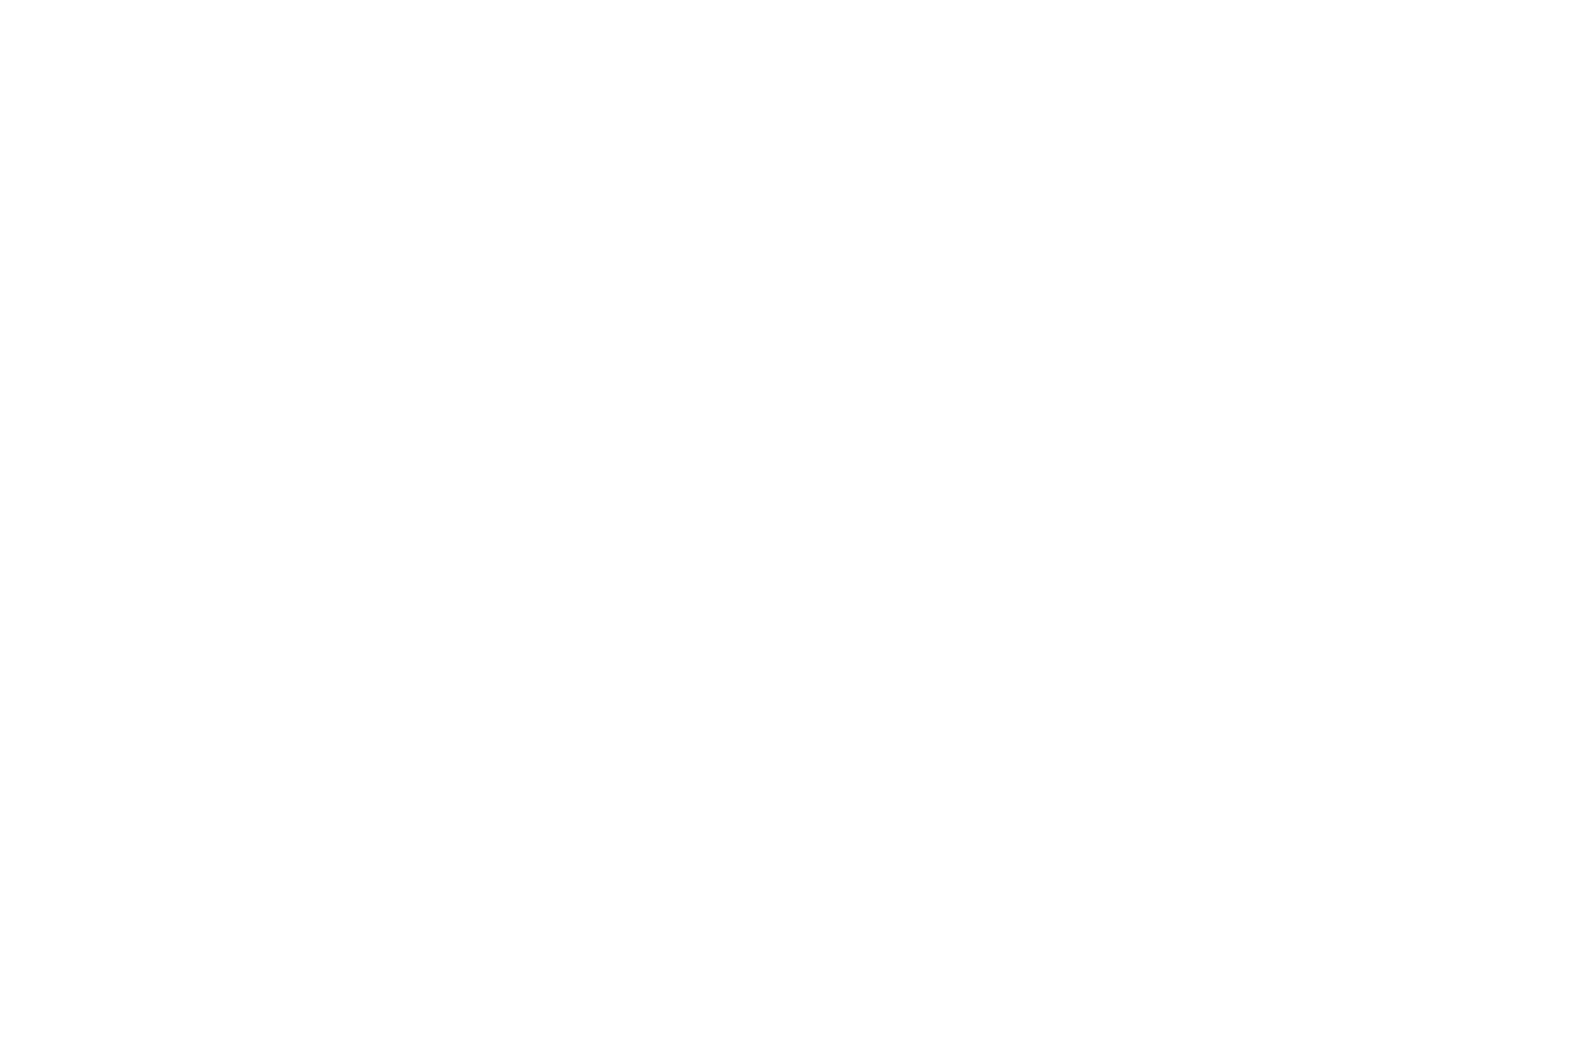 St. James's Place logo for dark backgrounds (transparent PNG)